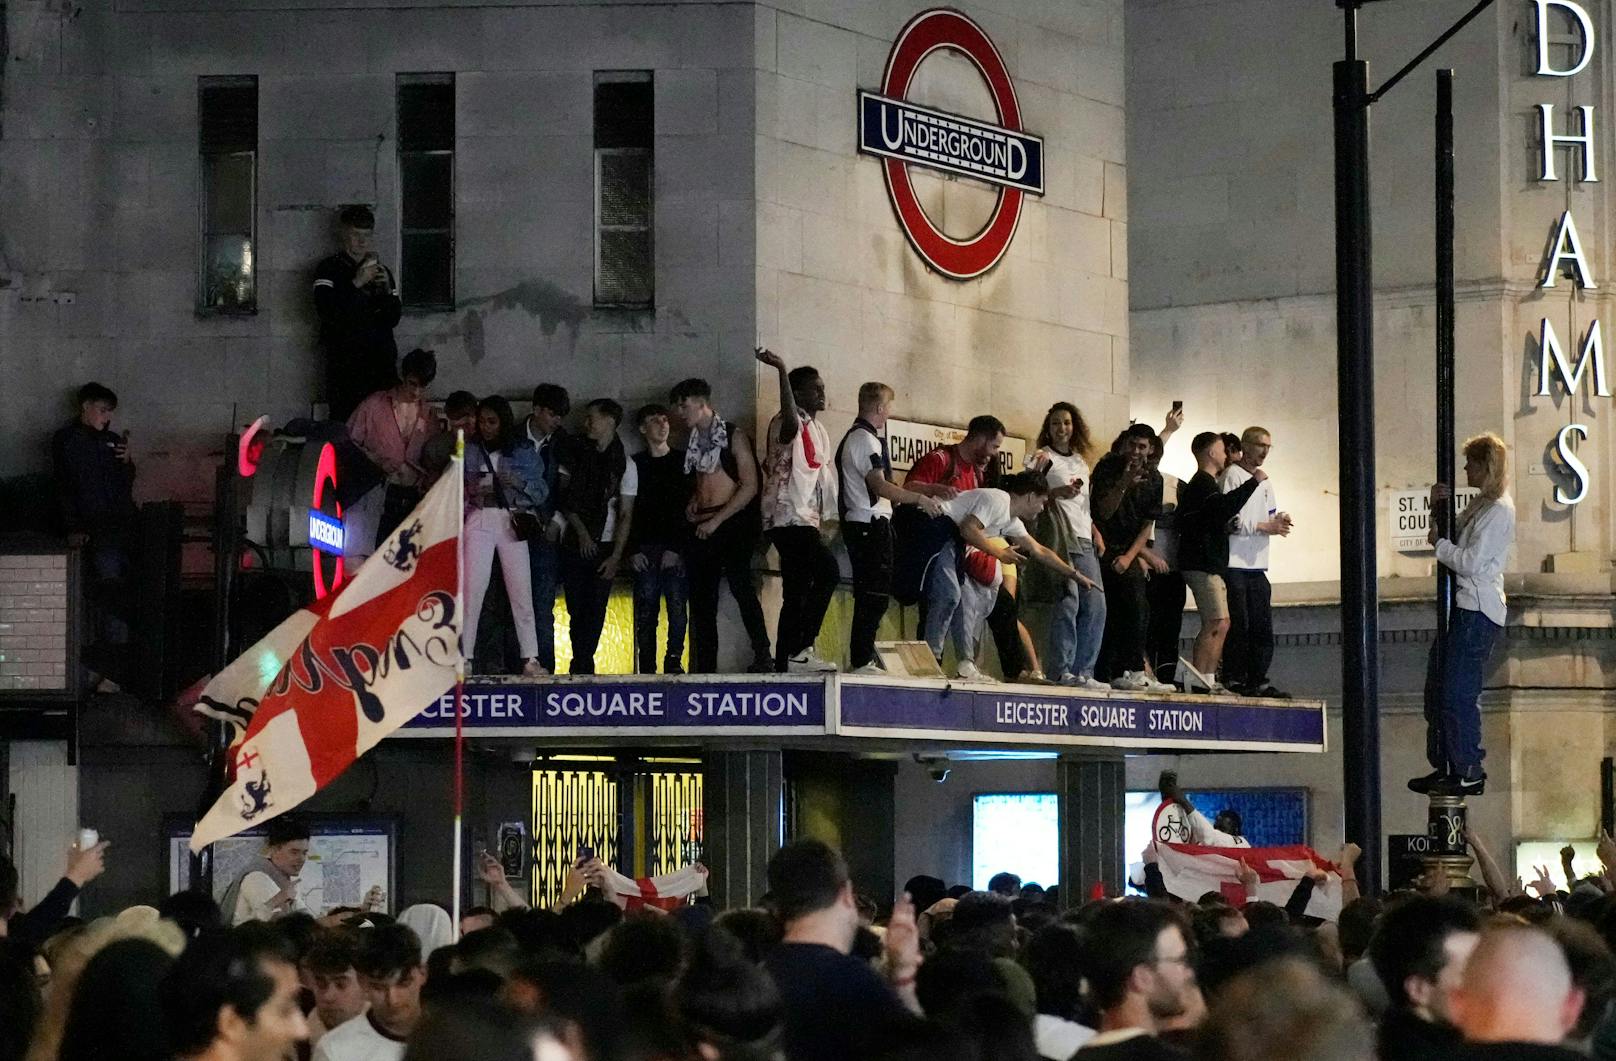 "It's coming home!" – England-Fans feierten den EM-Finaleinzug in Massen auf den Straßen Londons.